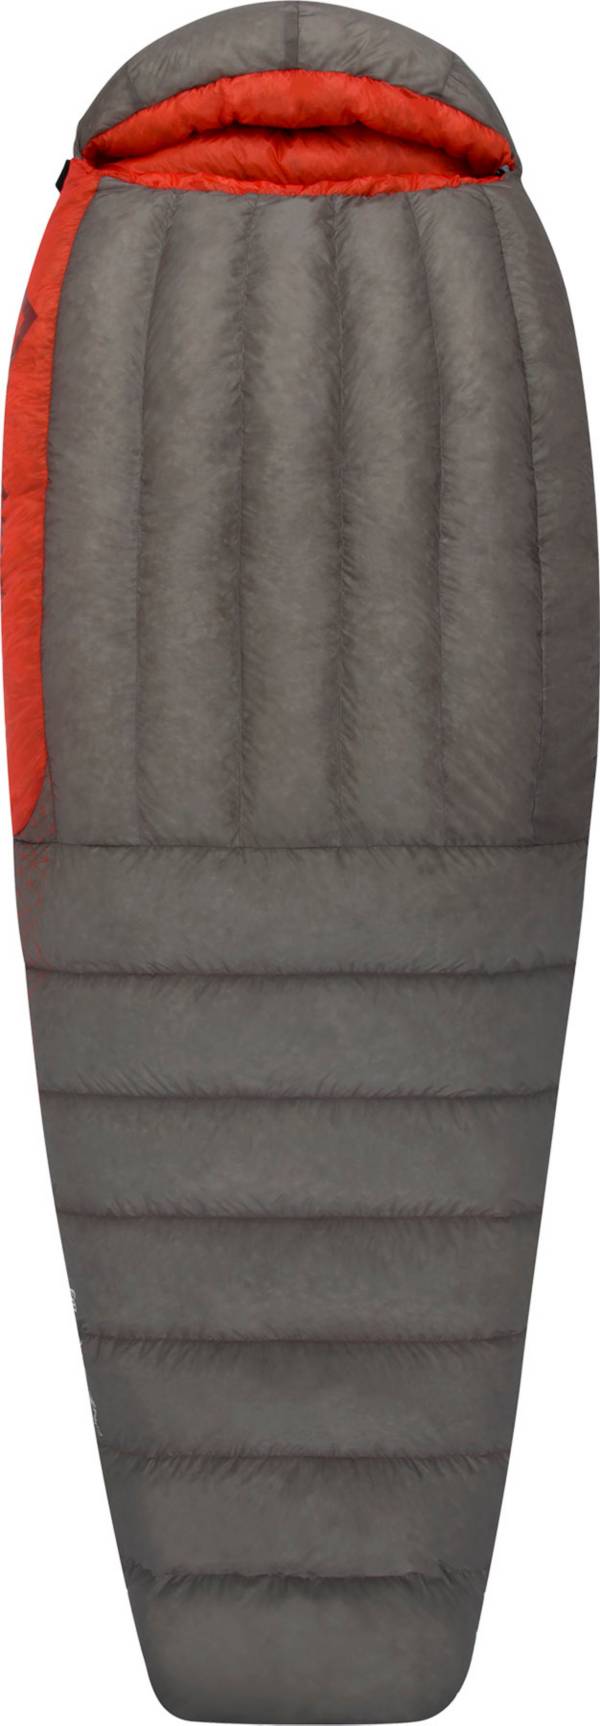 Sea to Summit Women's Flame II Ultralight Sleeping Bag product image